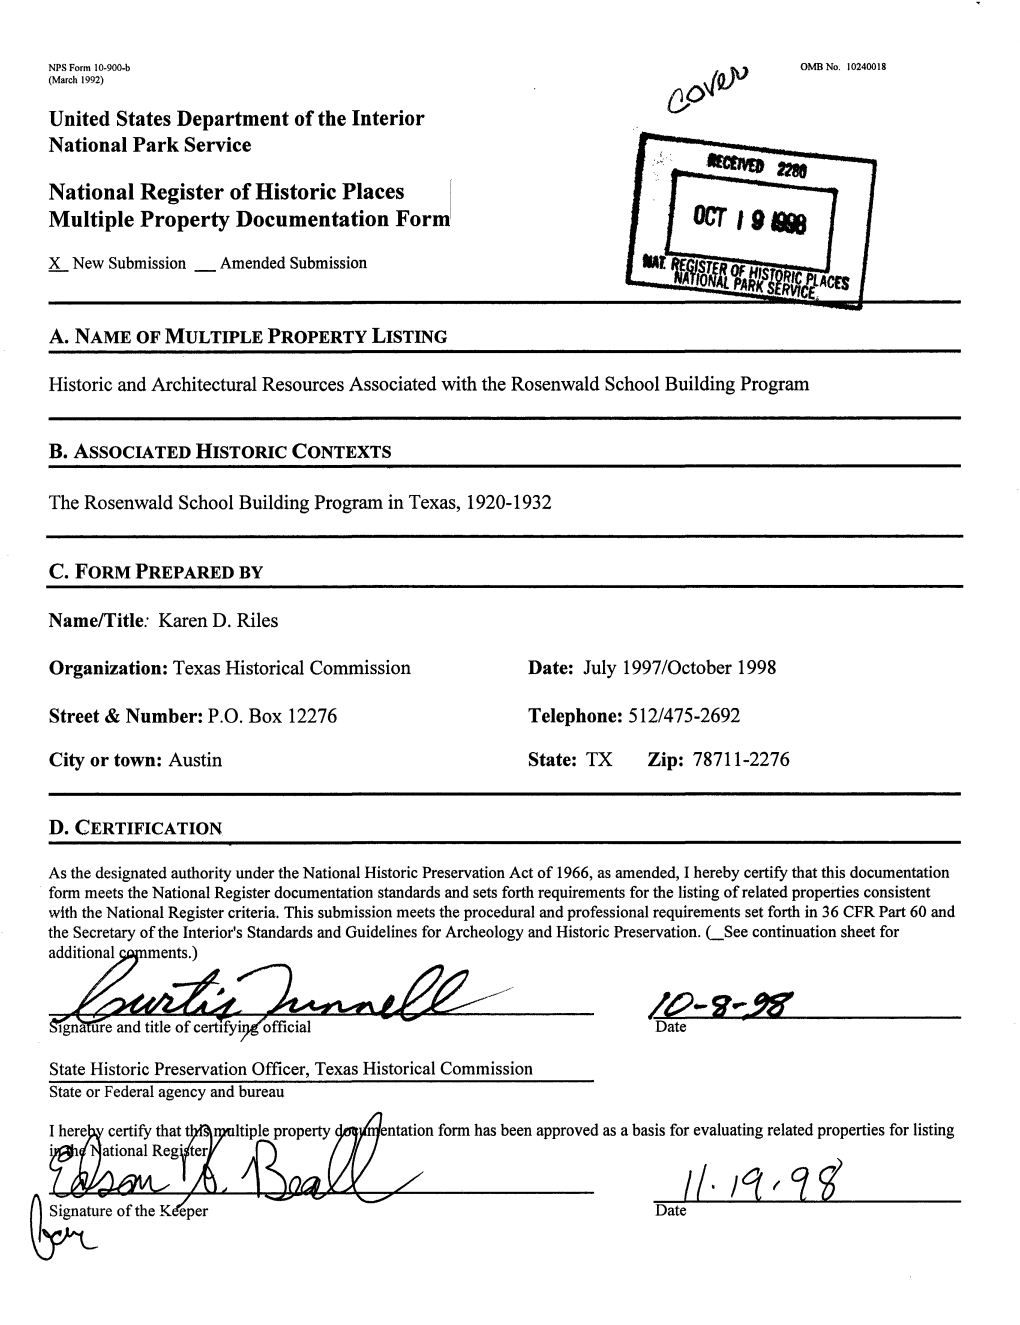 National Register of Historic Places I Multiple Property Documentation Form